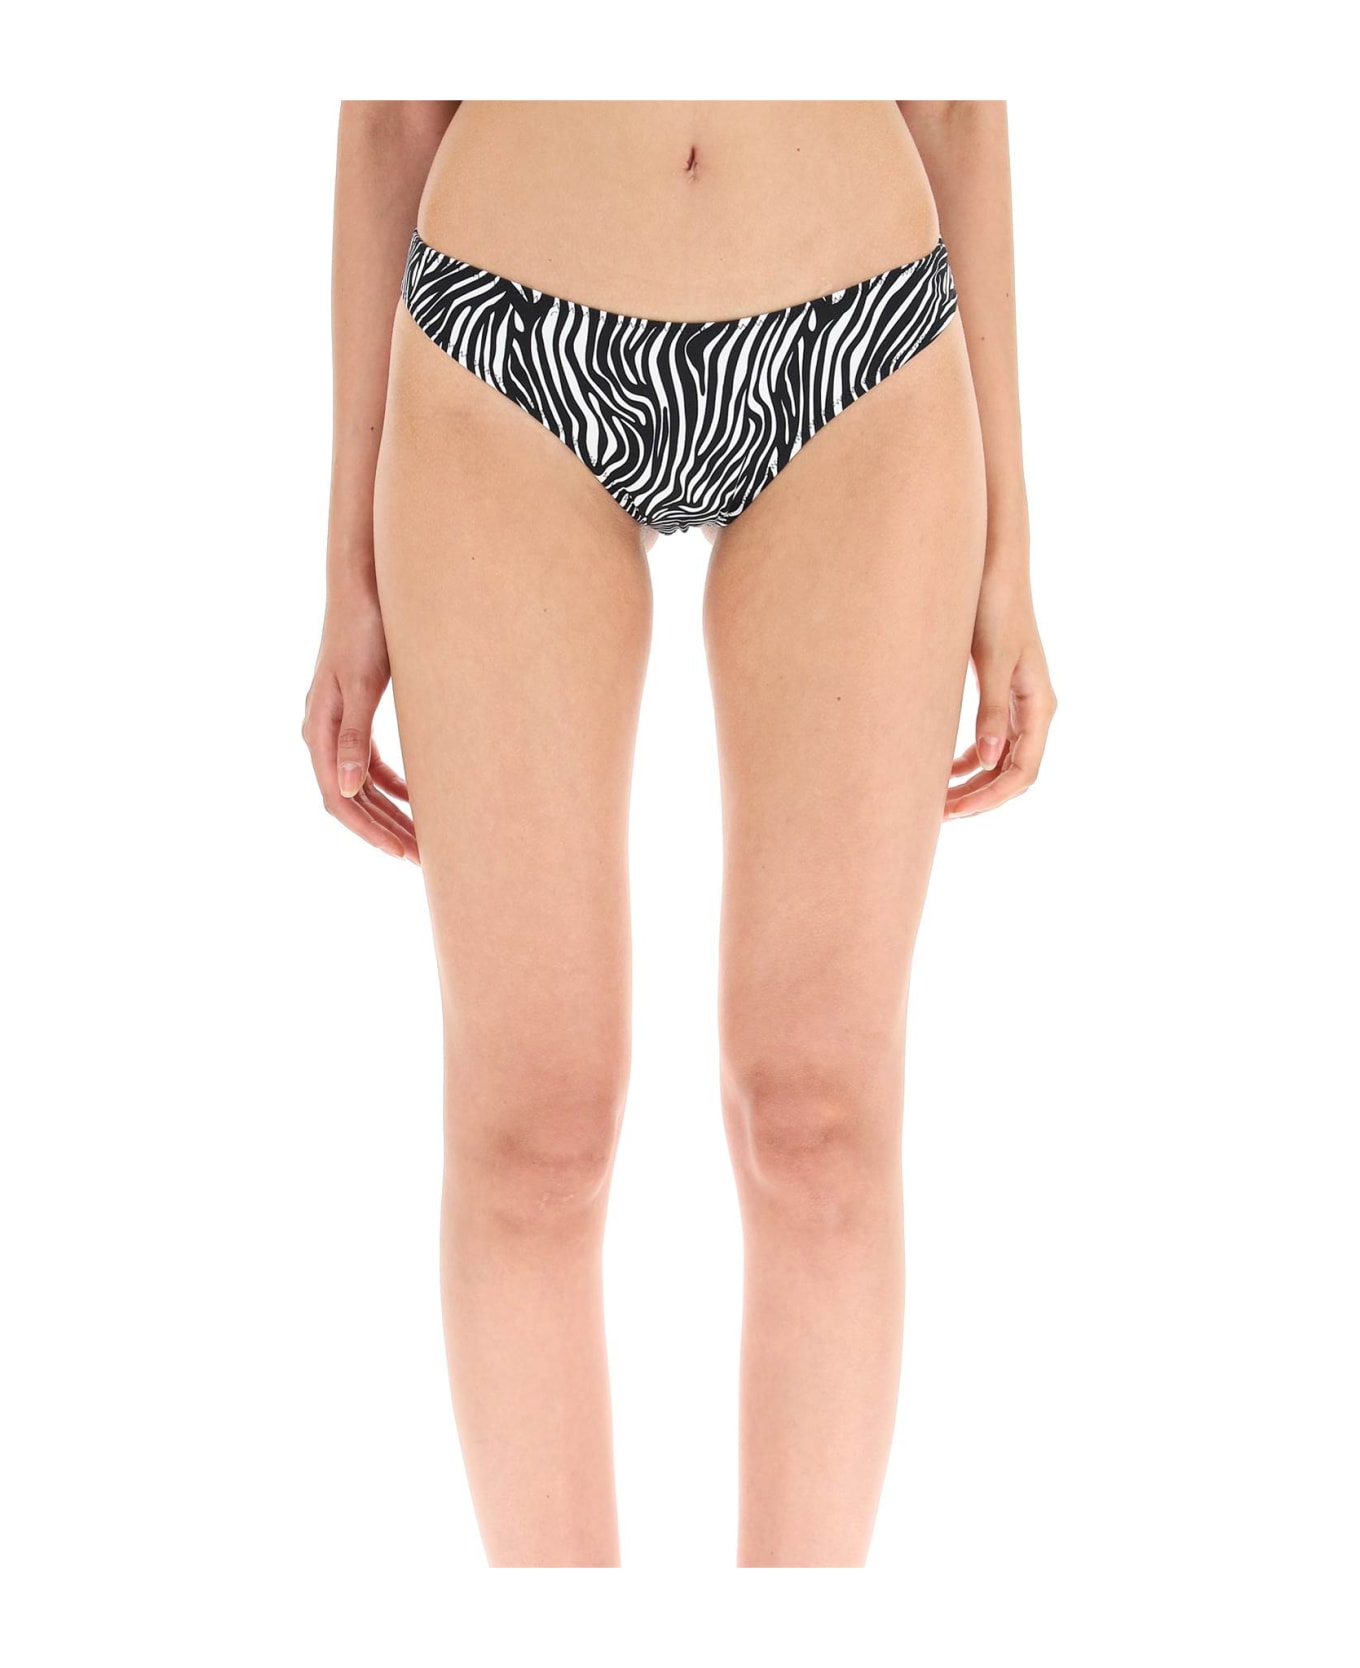 Tropic of C Curve Bikini Bottom - ZEBRA DRIFTWOOD (White)